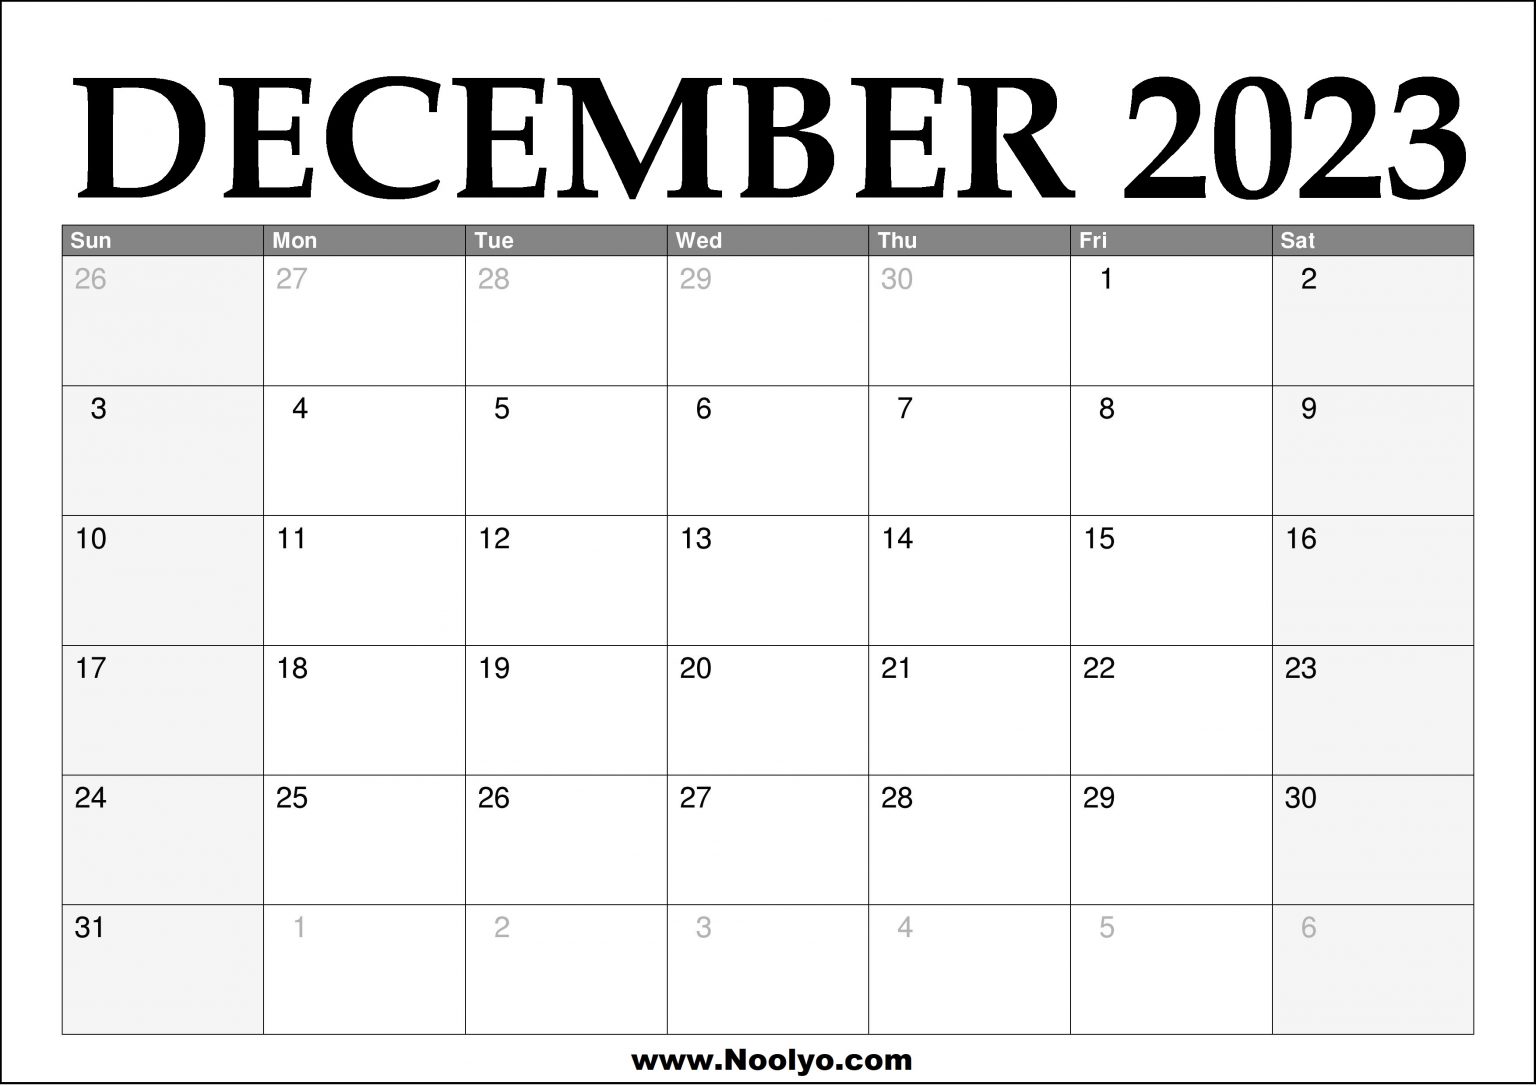 calendars-calendars-printable